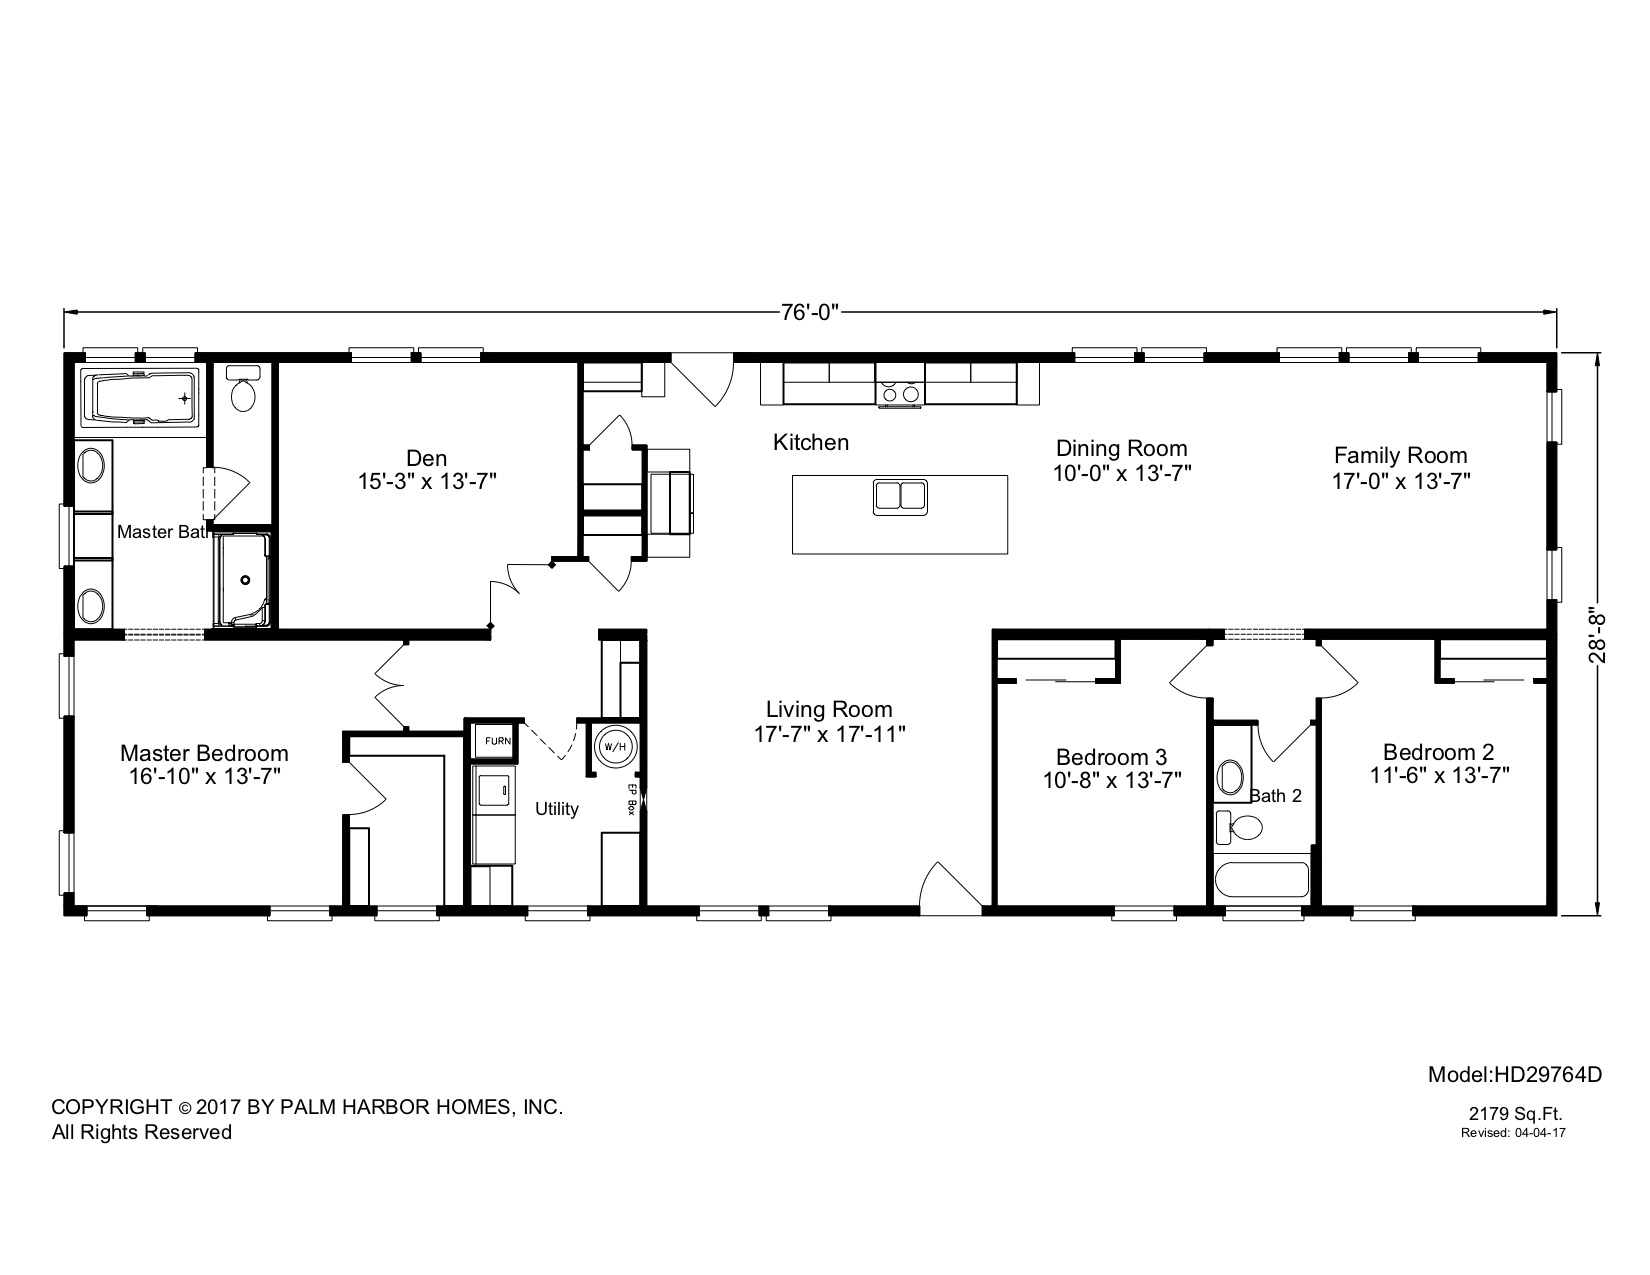 Homes Direct Modular Homes - Model HD29764D - Floorplan